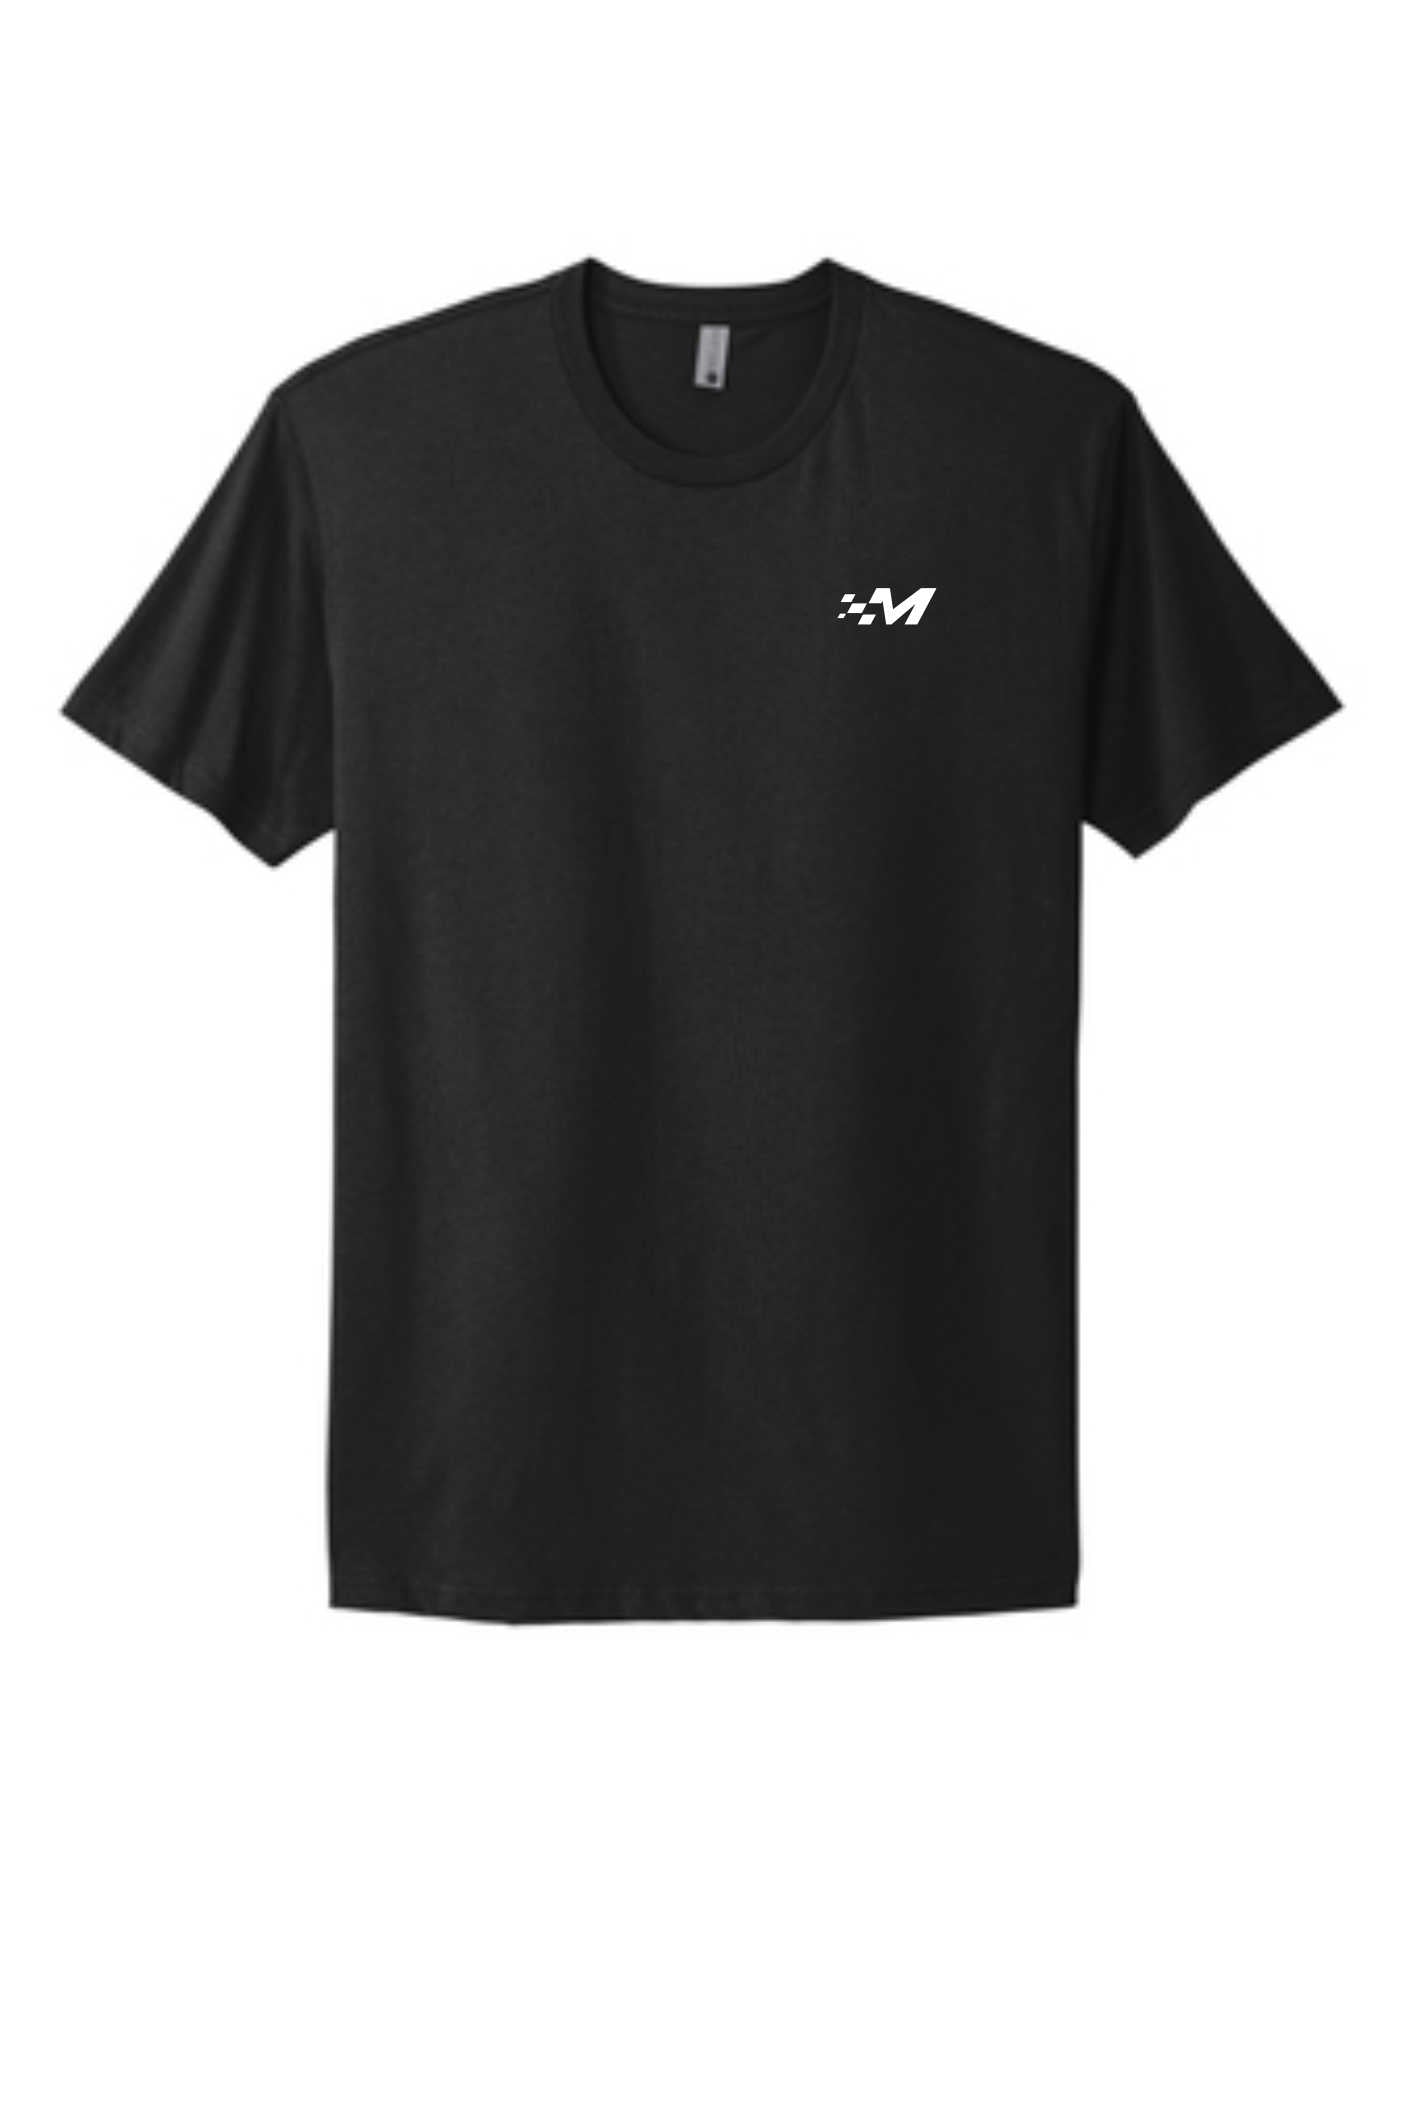 G81 M3 "Generations" - Short Sleeve T-Shirt - Black